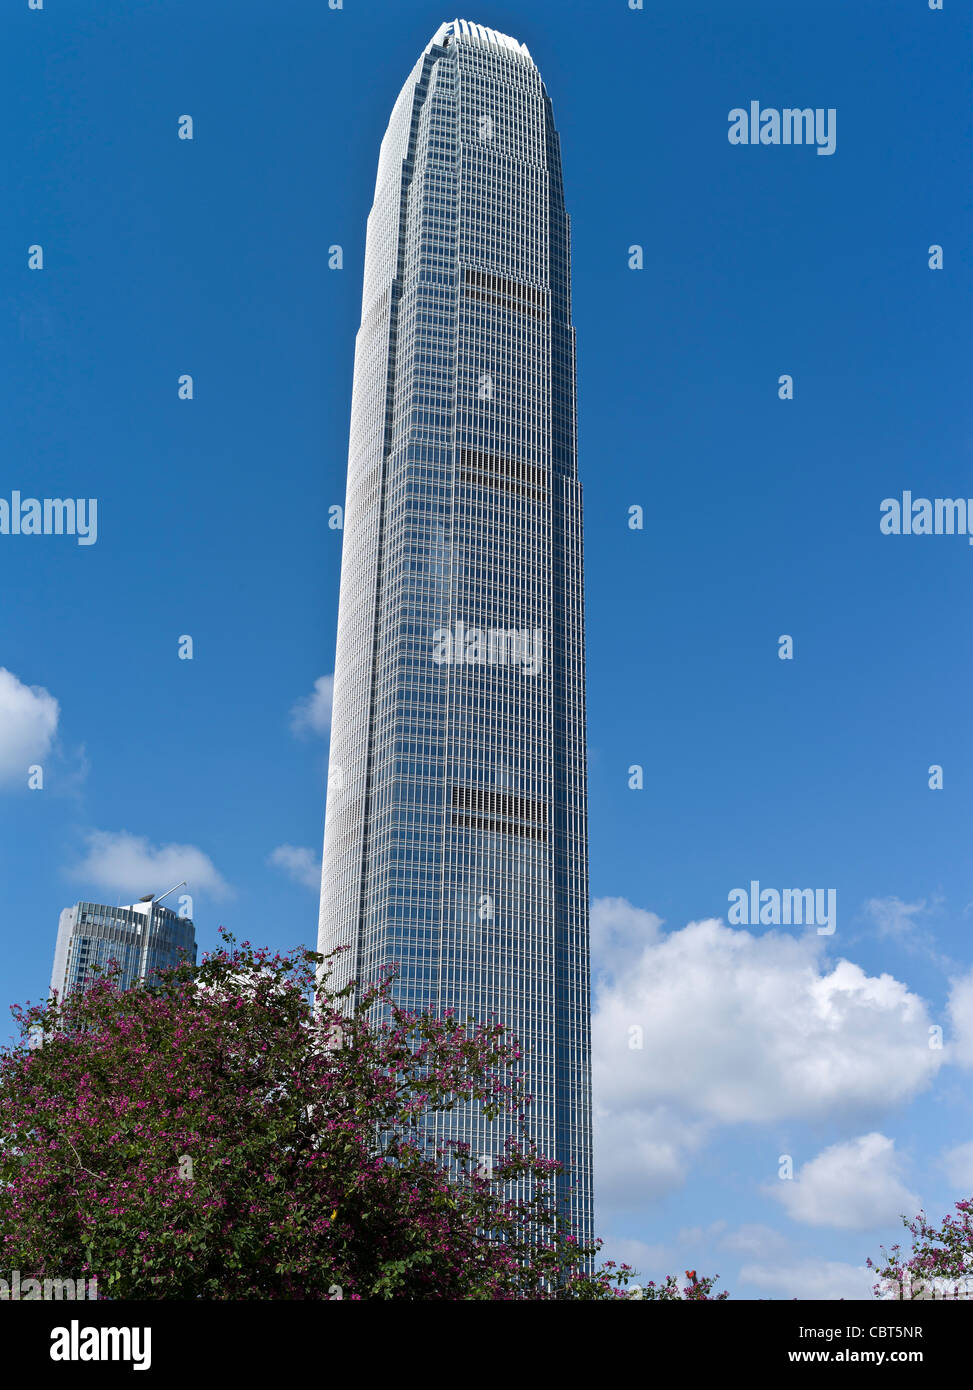 dh  CENTRAL HONG KONG Central Hong Kong skyscraper IFC 2 tower international finance centre china Stock Photo